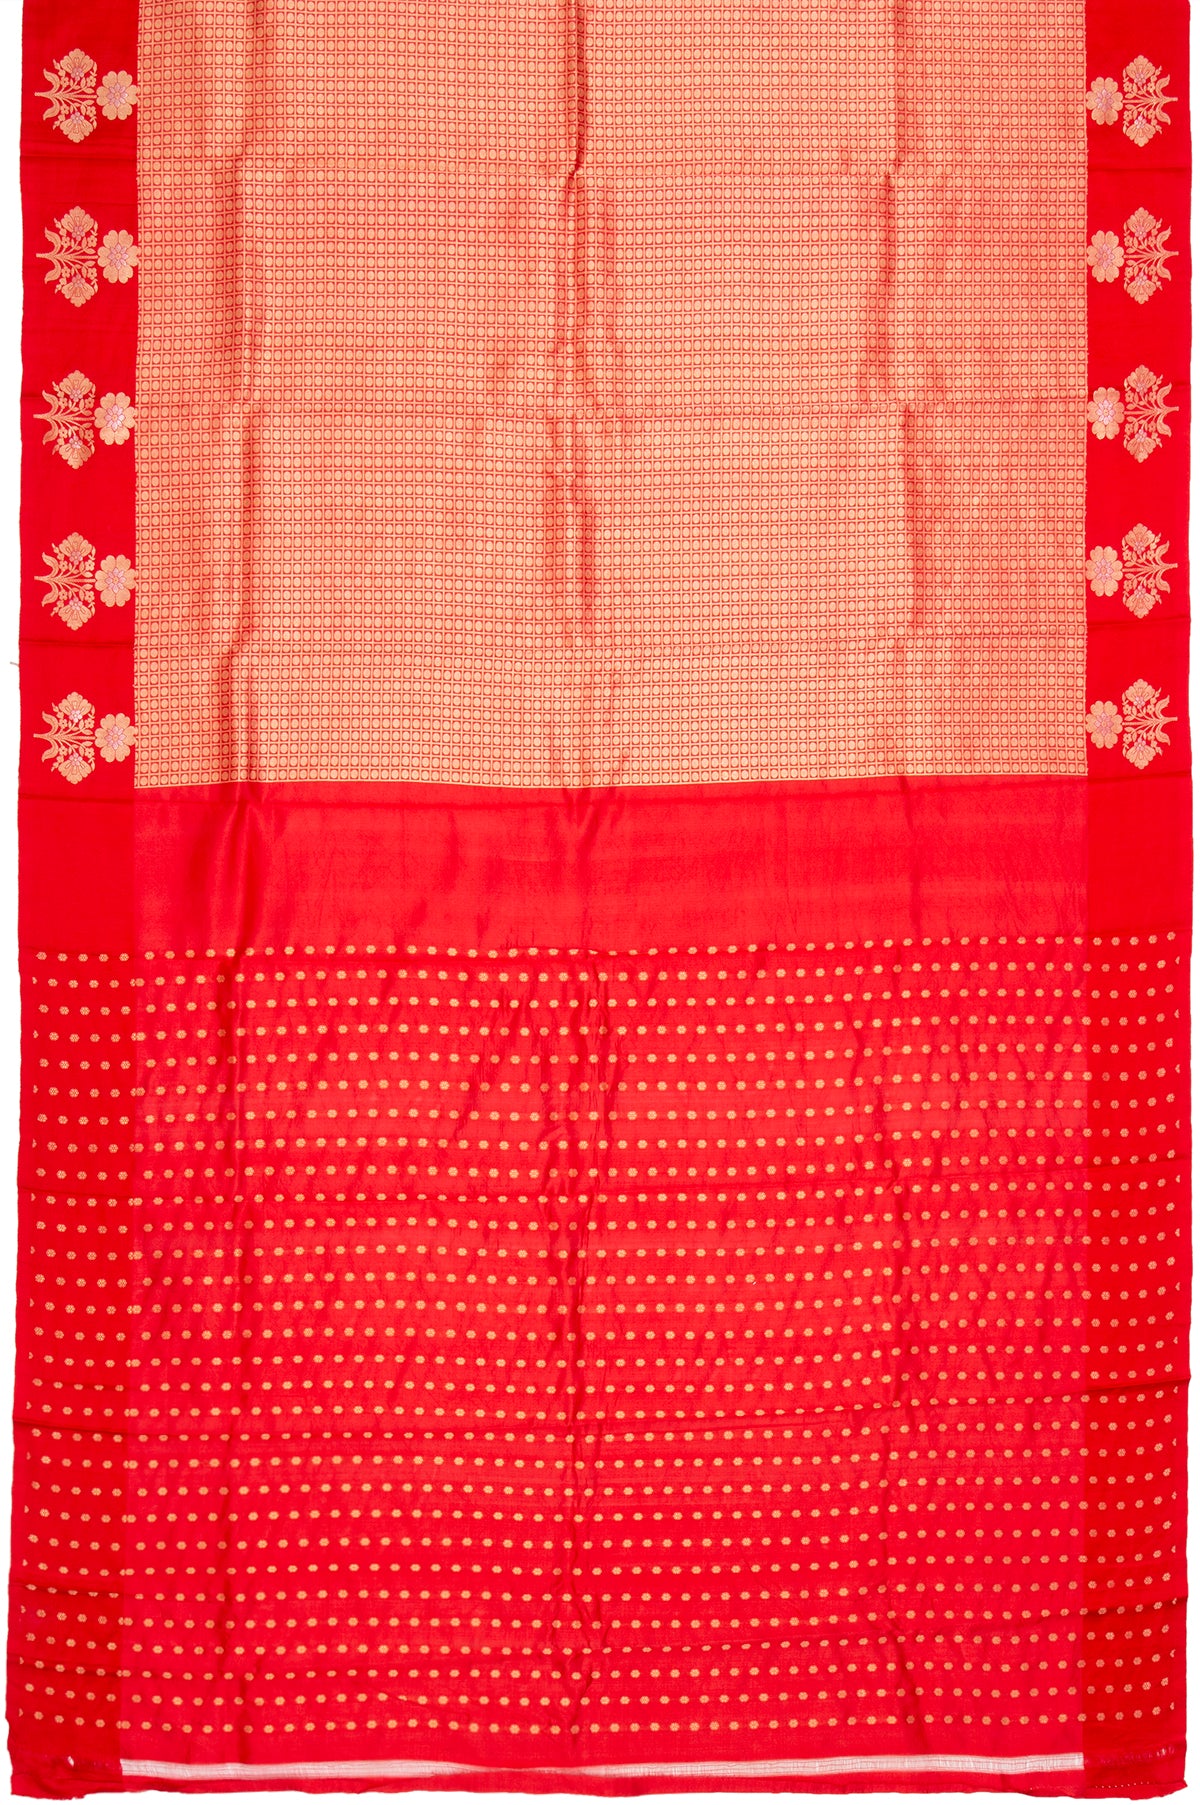 Red Muslin Silk Saree